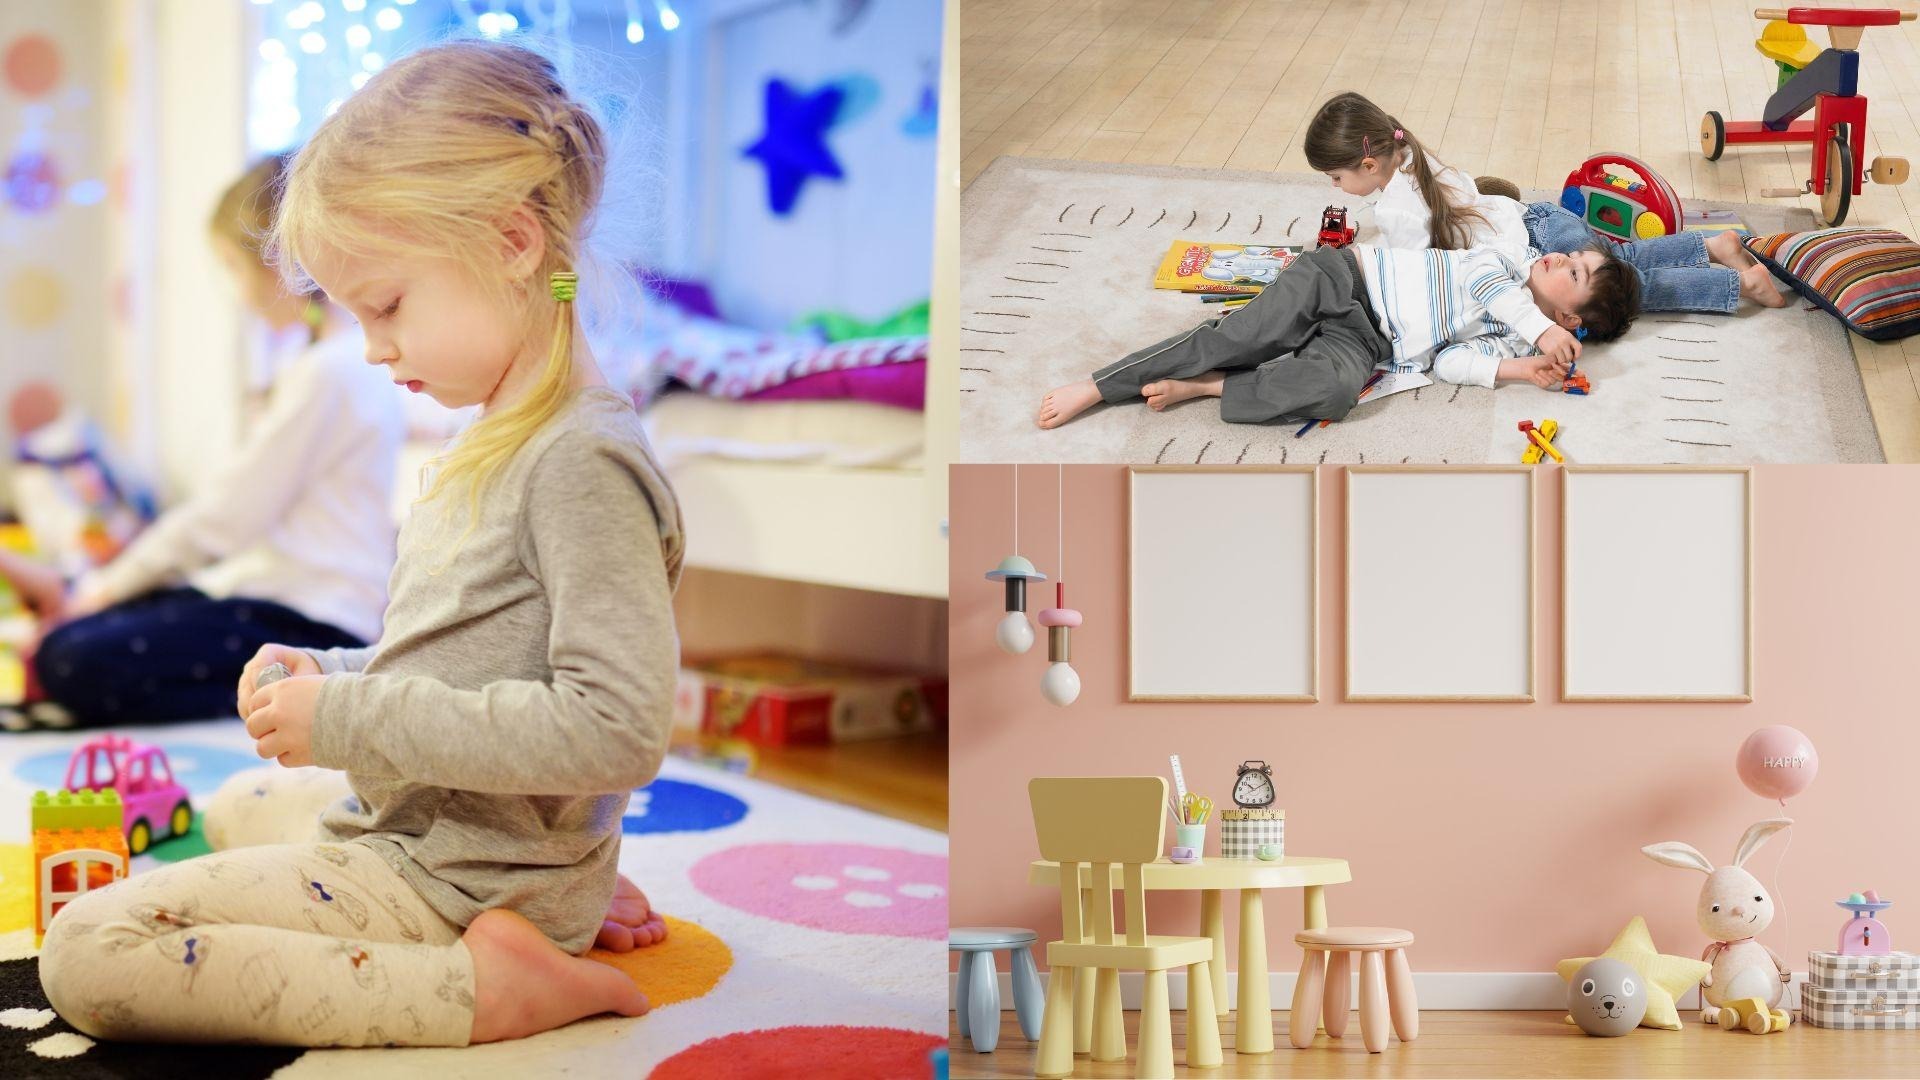 ideas_to_decorate_child-proof_home_IDW-Italia-Prague-Biella